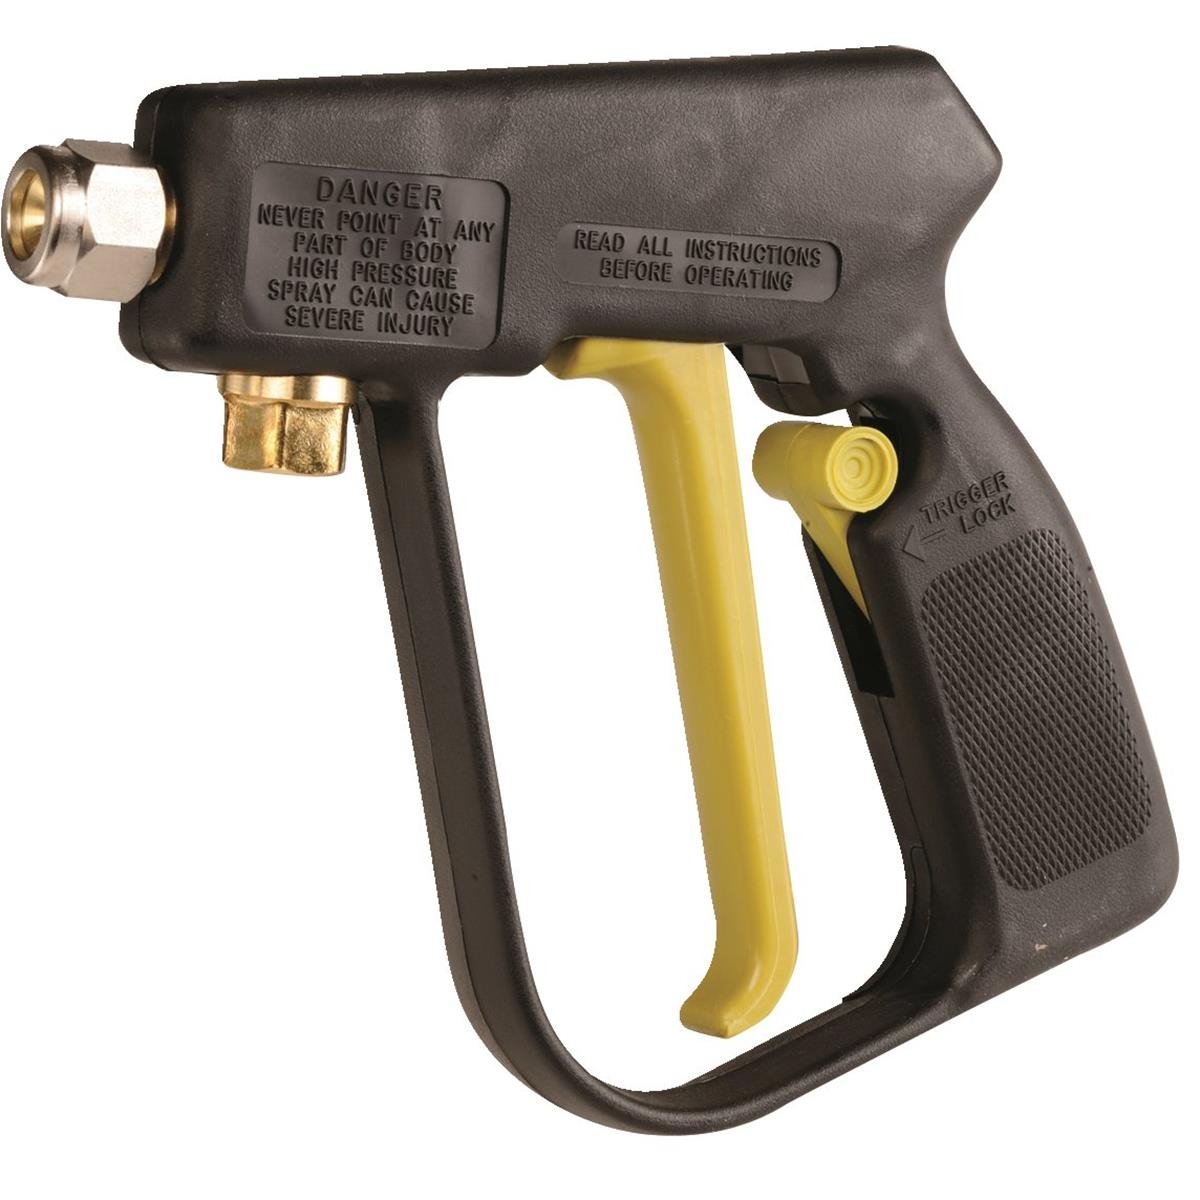 Mc gun. Spraying Systems co 9360.